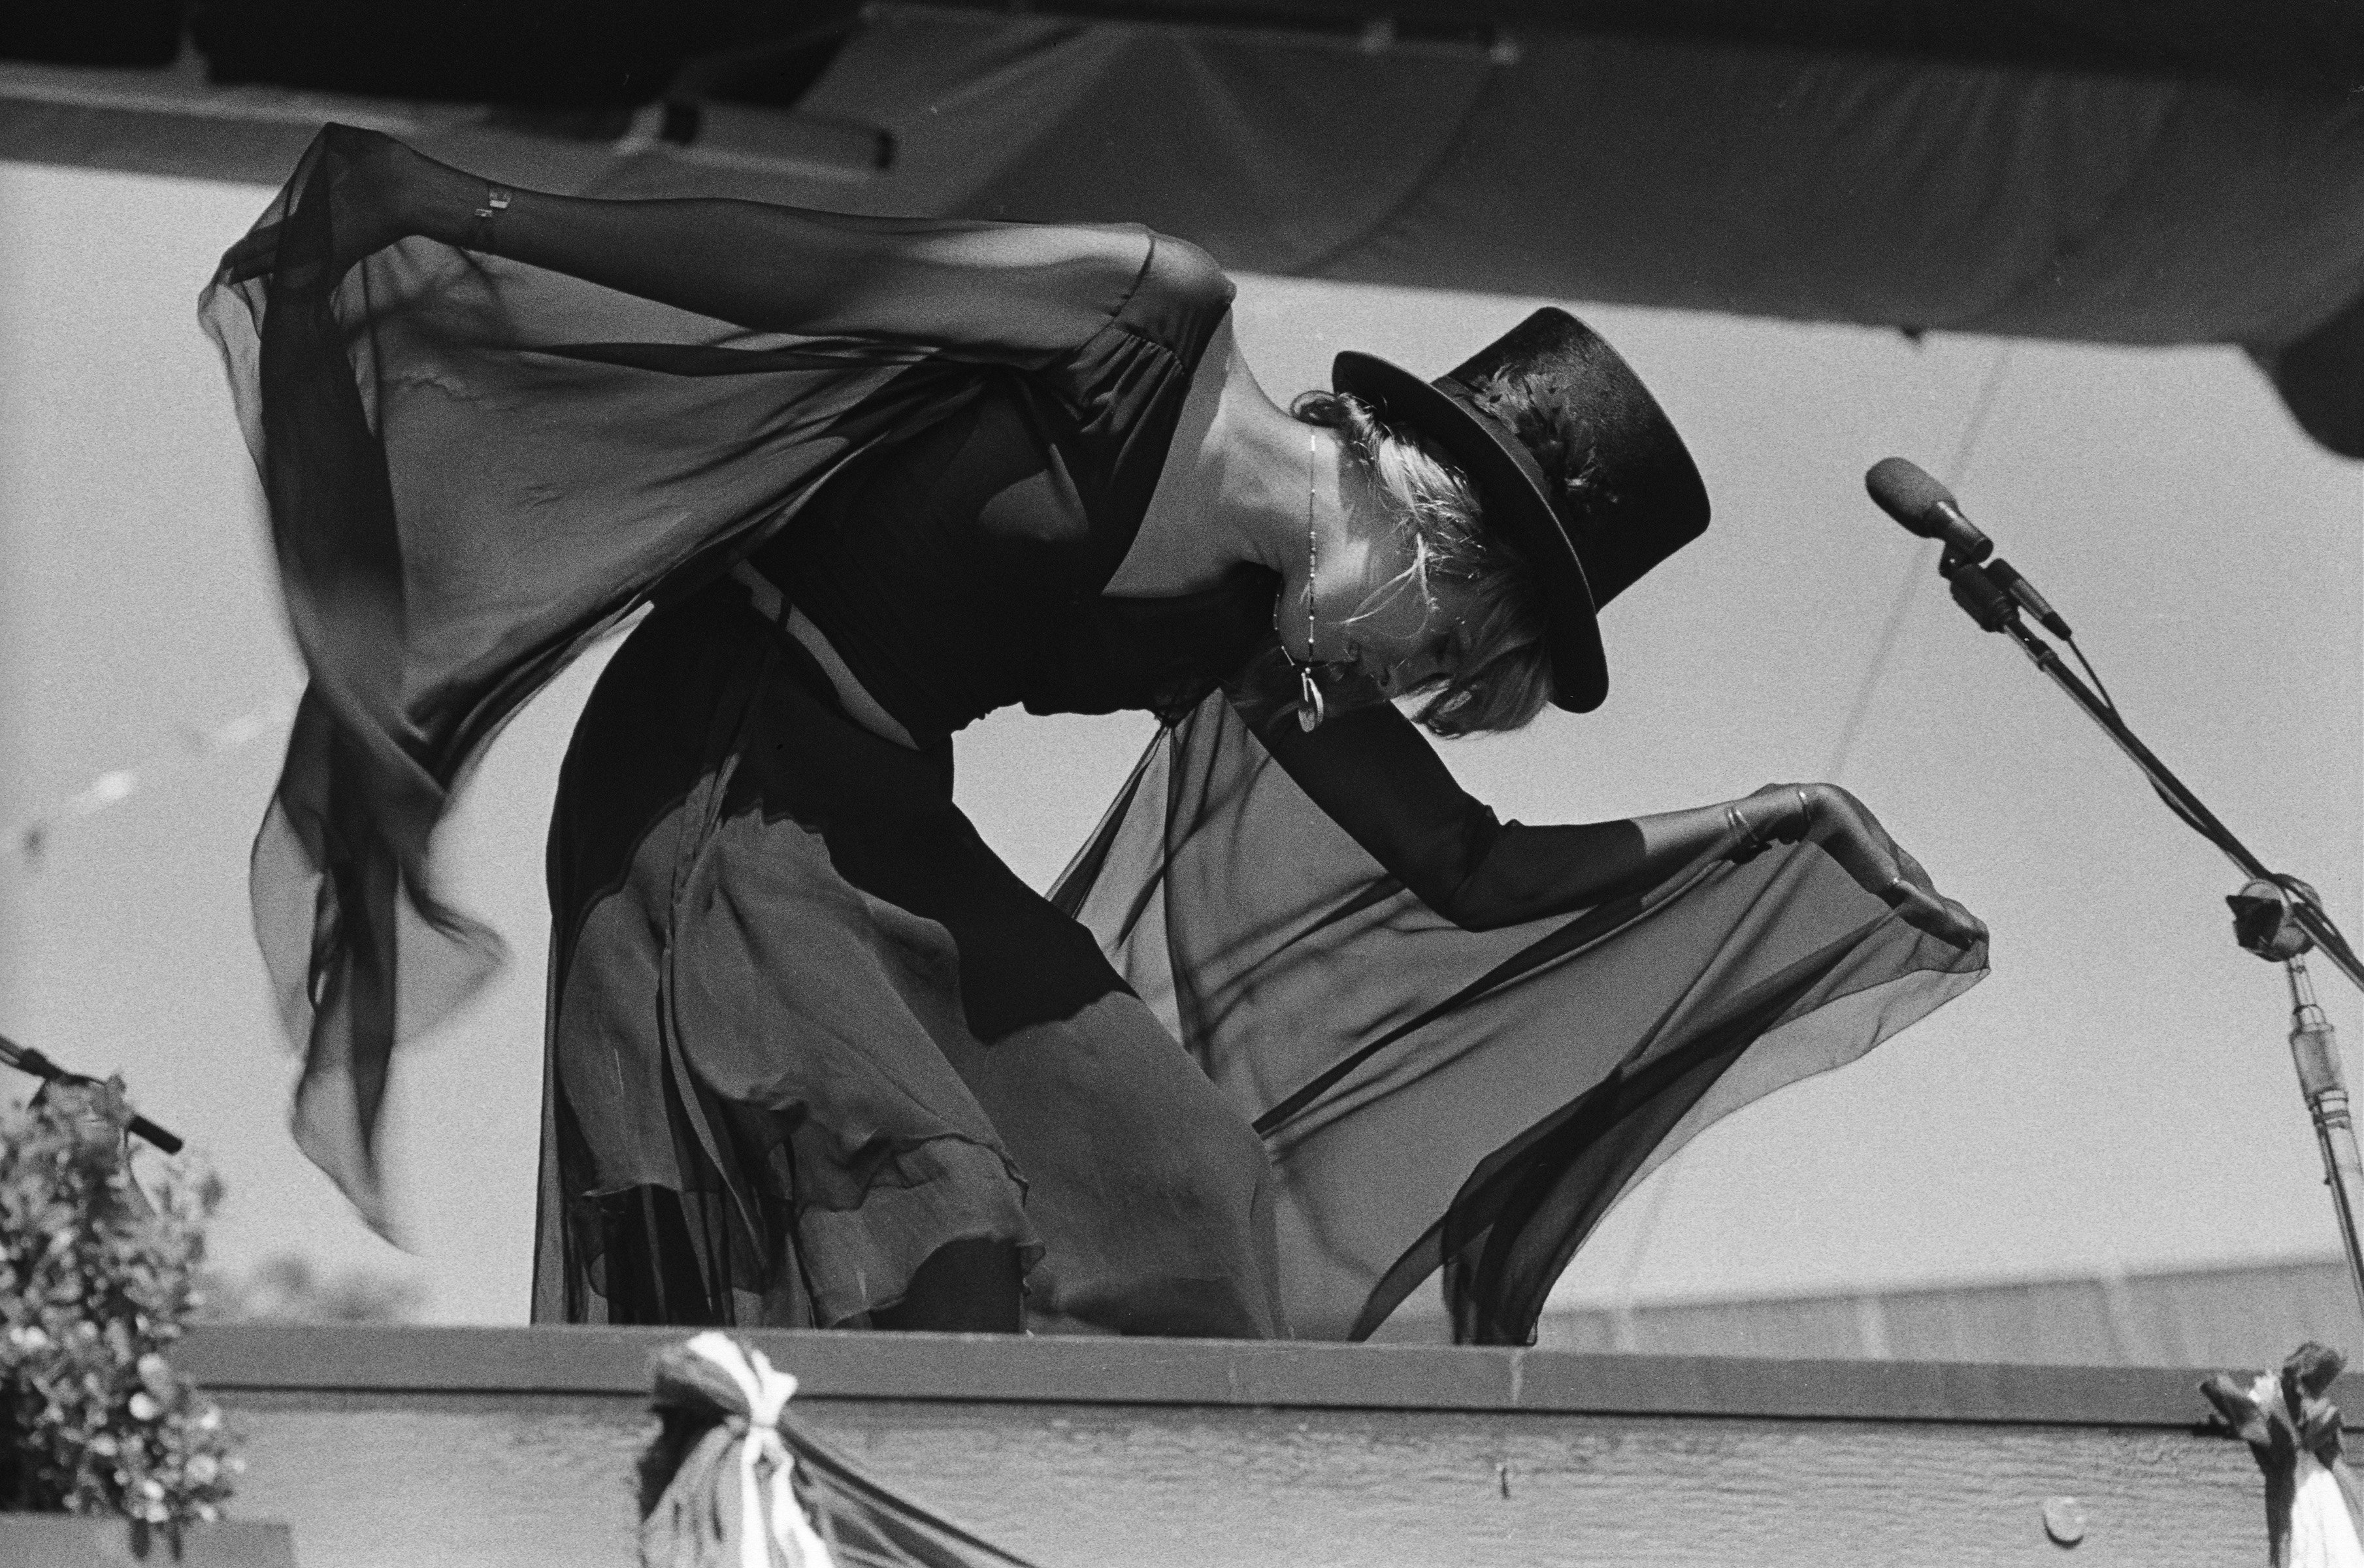 Stevie Nicks dances in a black chiffon outfit